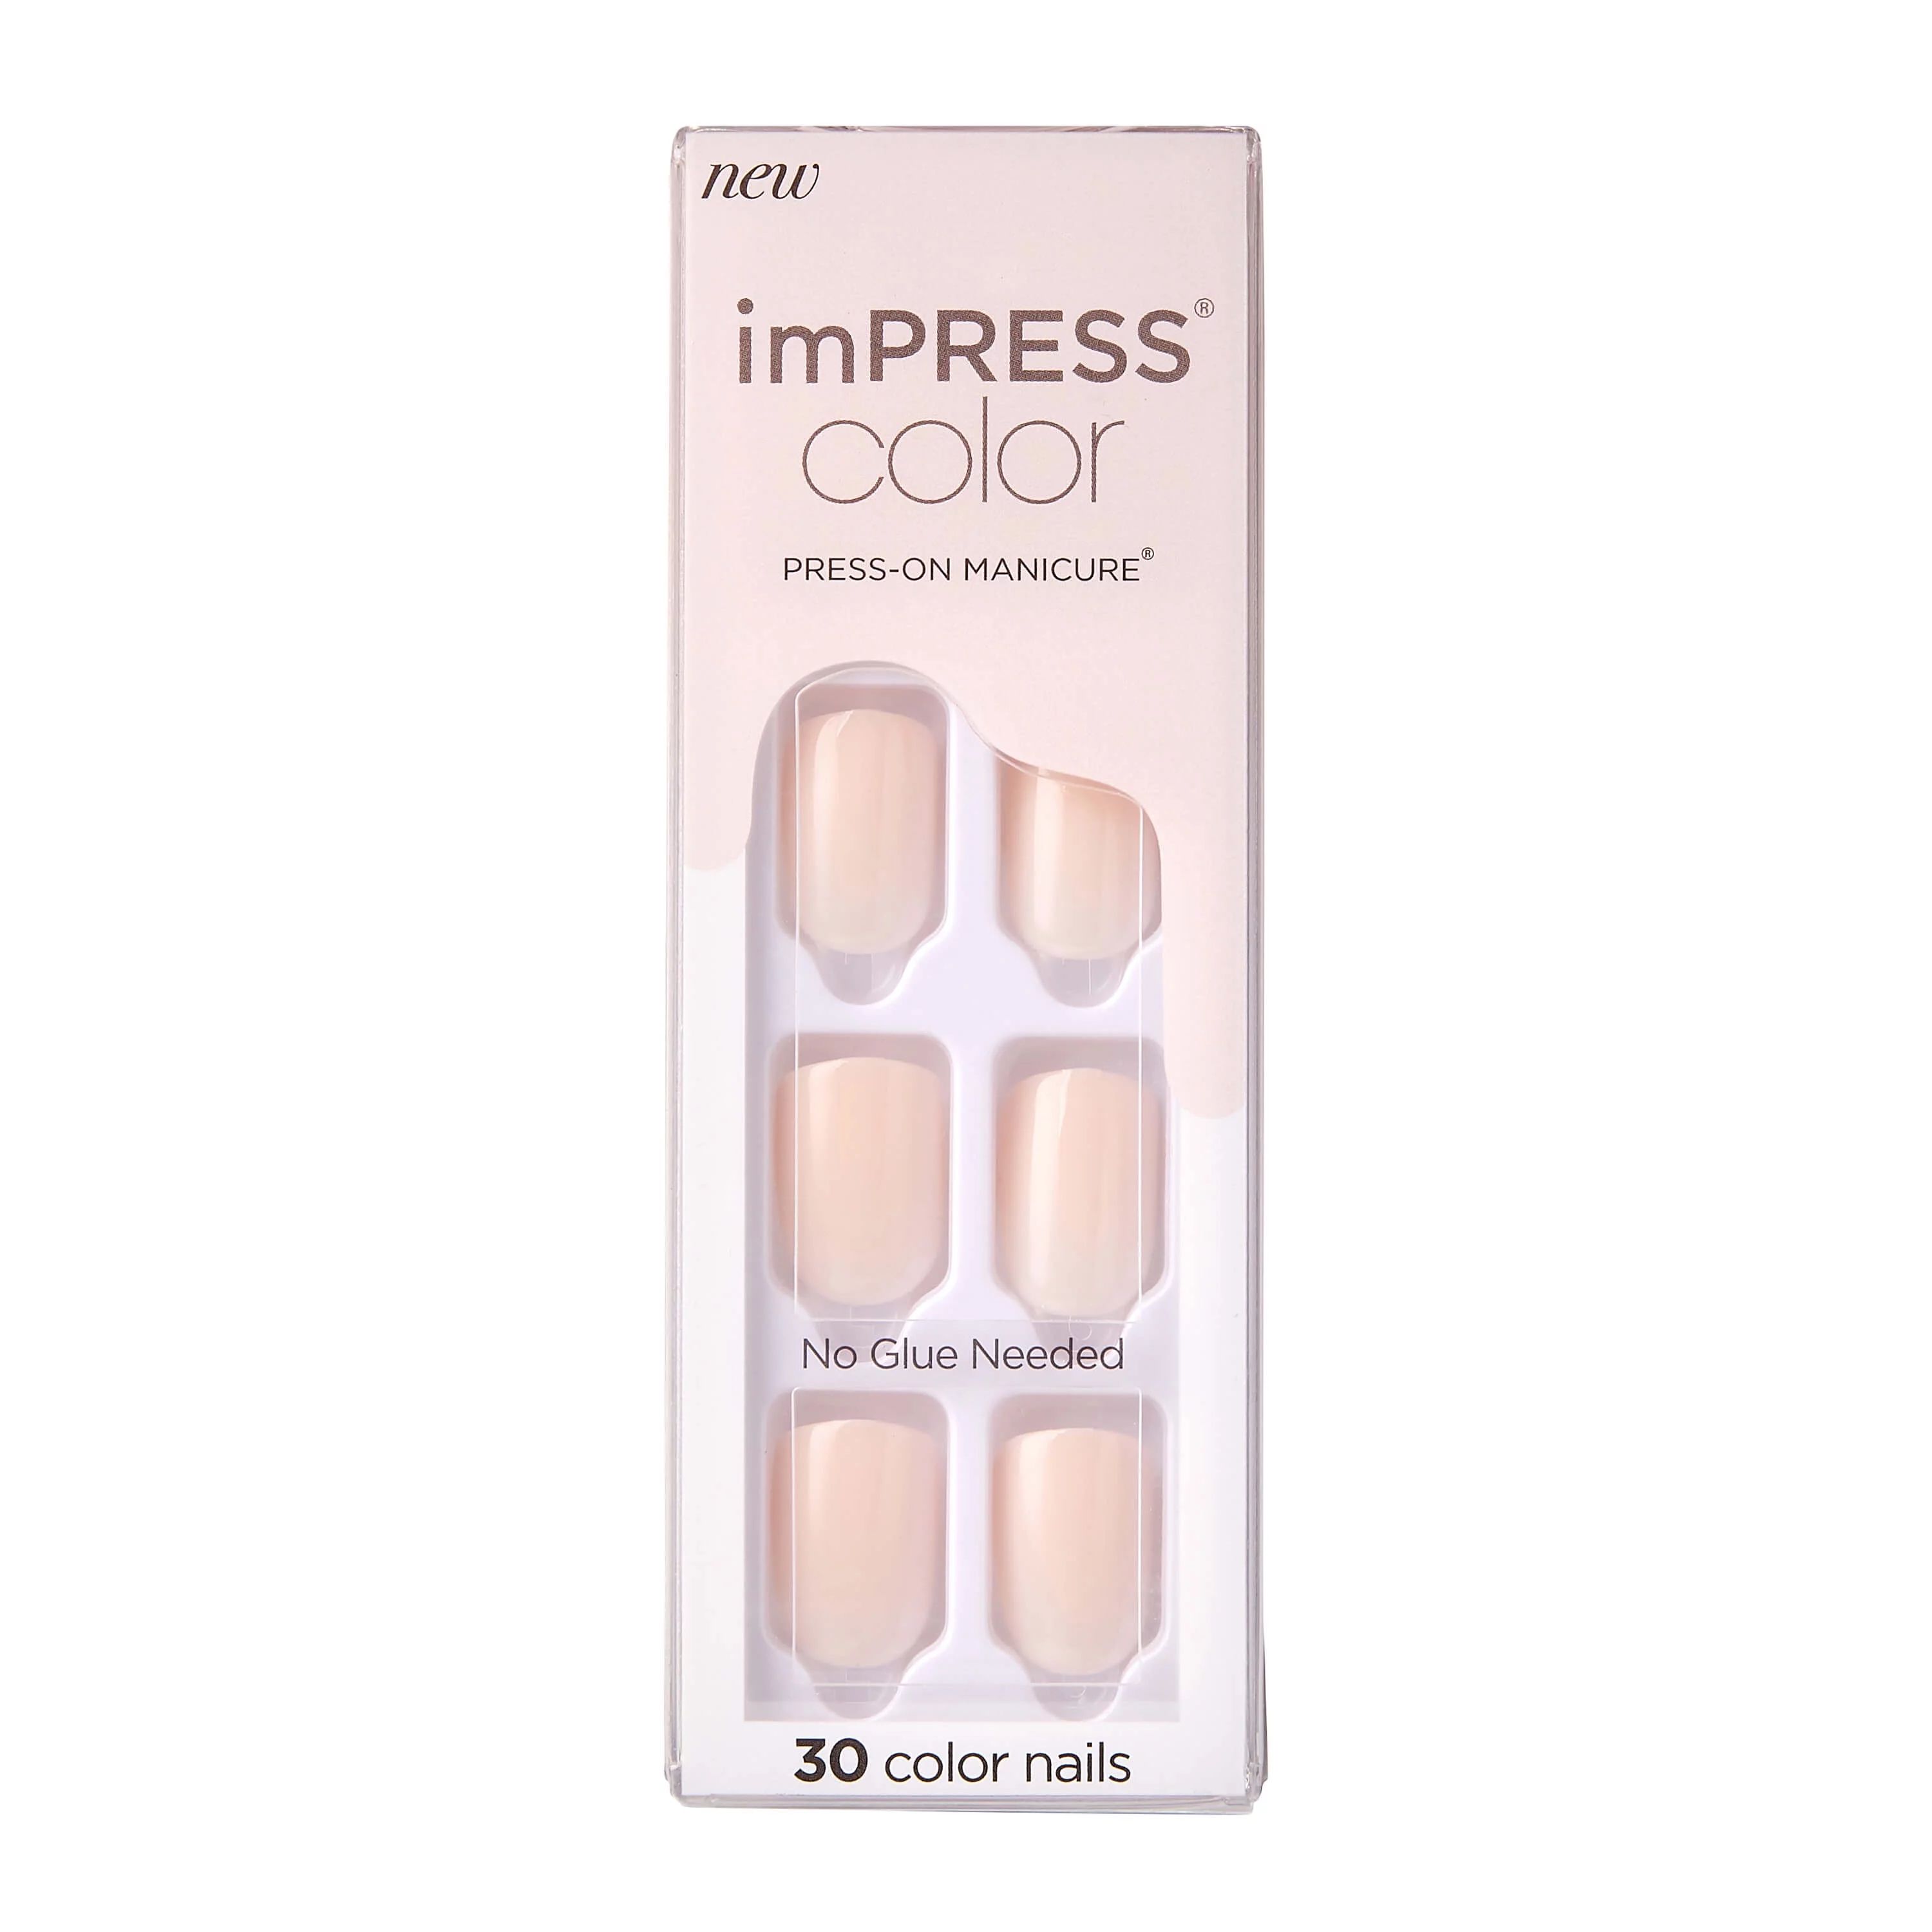 KISS imPRESS Color Press-on Manicure, Point Pink, Short | Walmart (US)